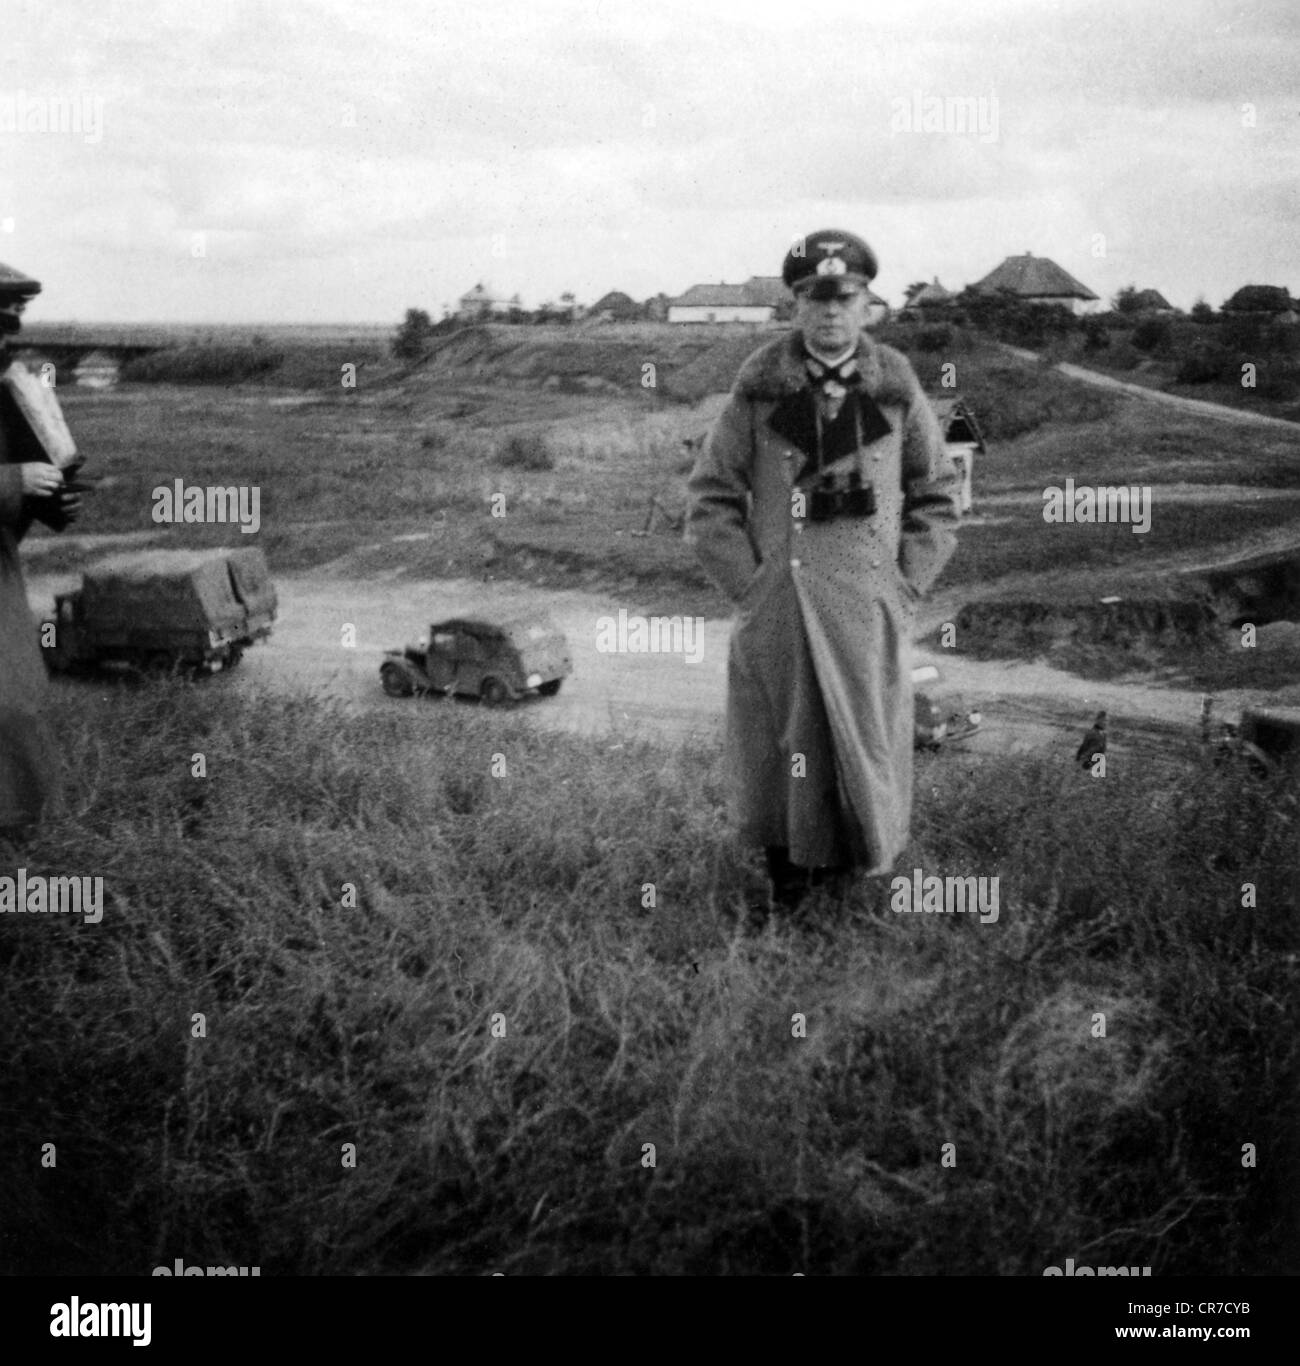 Kleist, Ewald von, 8.8.1881 - 16.10.1954, German general, full length, as commander-in-chief of 1st Panzer Army during Operation 'Barbarossa', Ukraine, summer 1941, Stock Photo